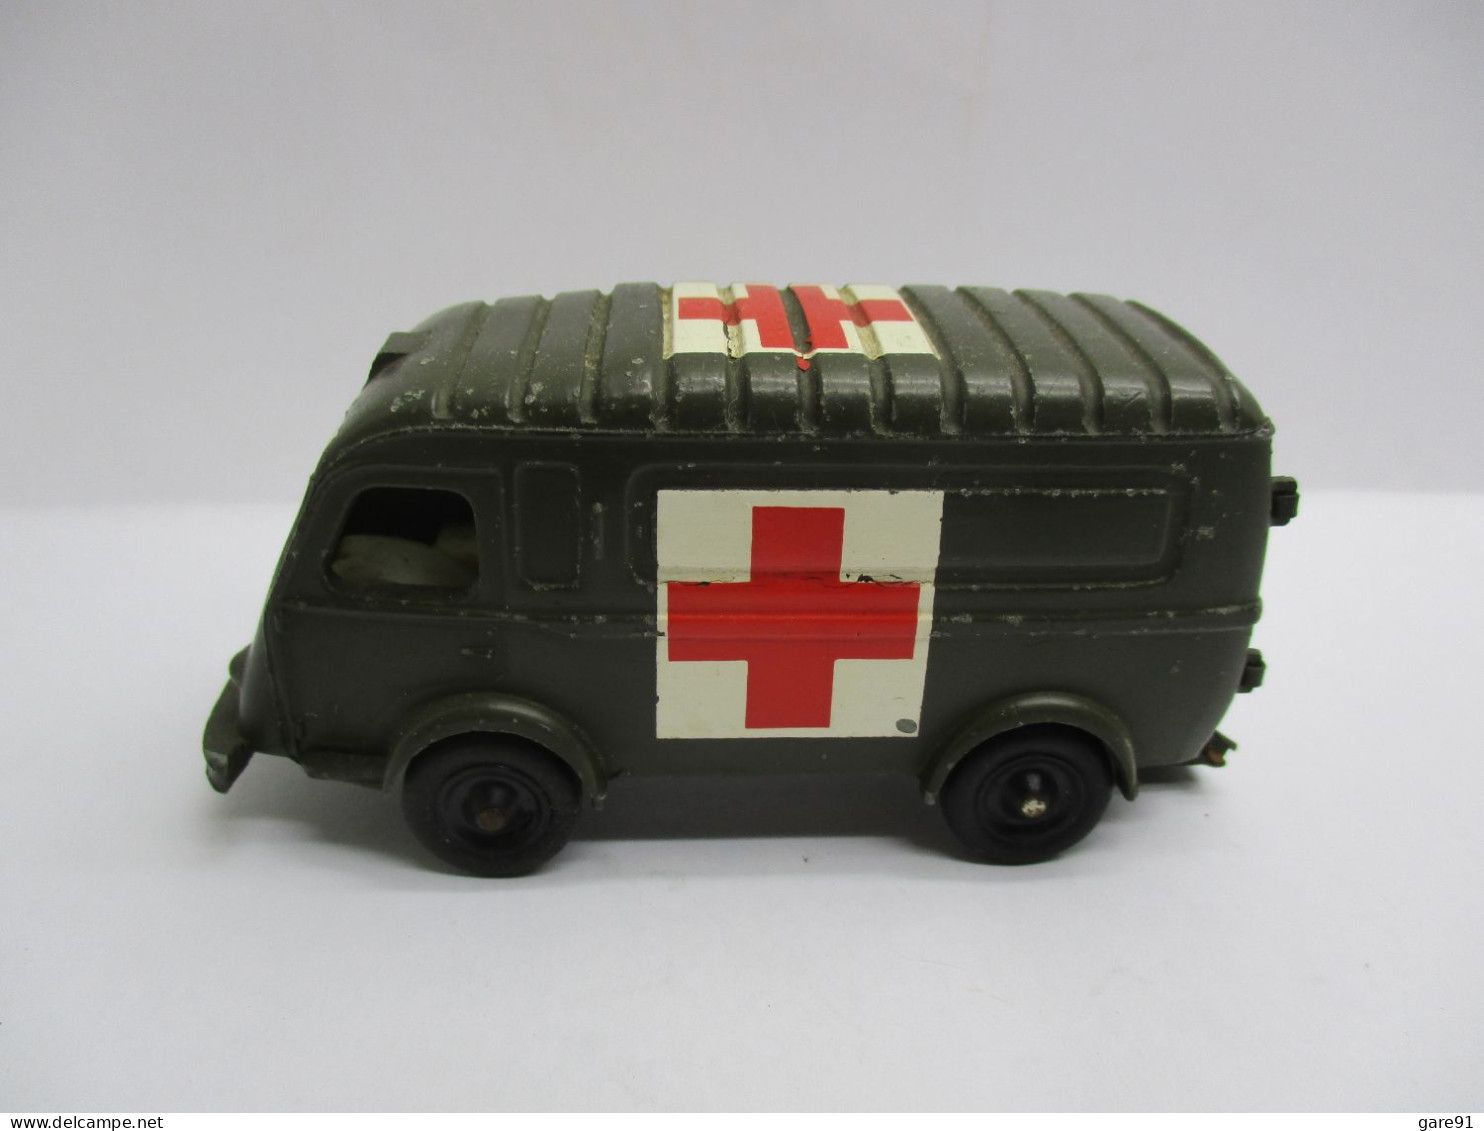 CIJ  1000 KG Ambulance - Toy Memorabilia